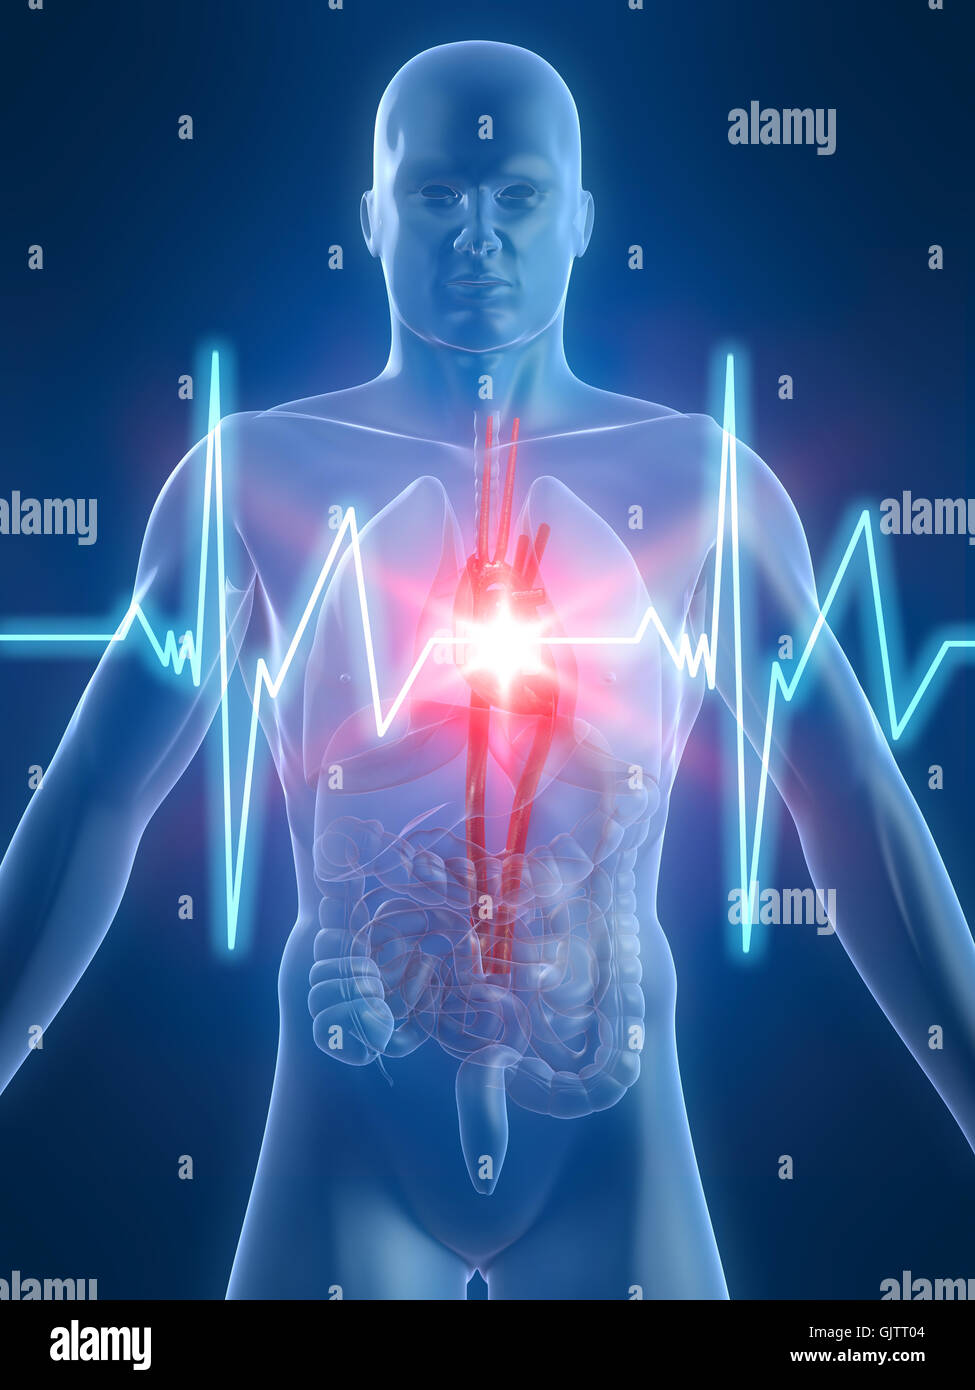 heartbeat artery disease Stock Photo